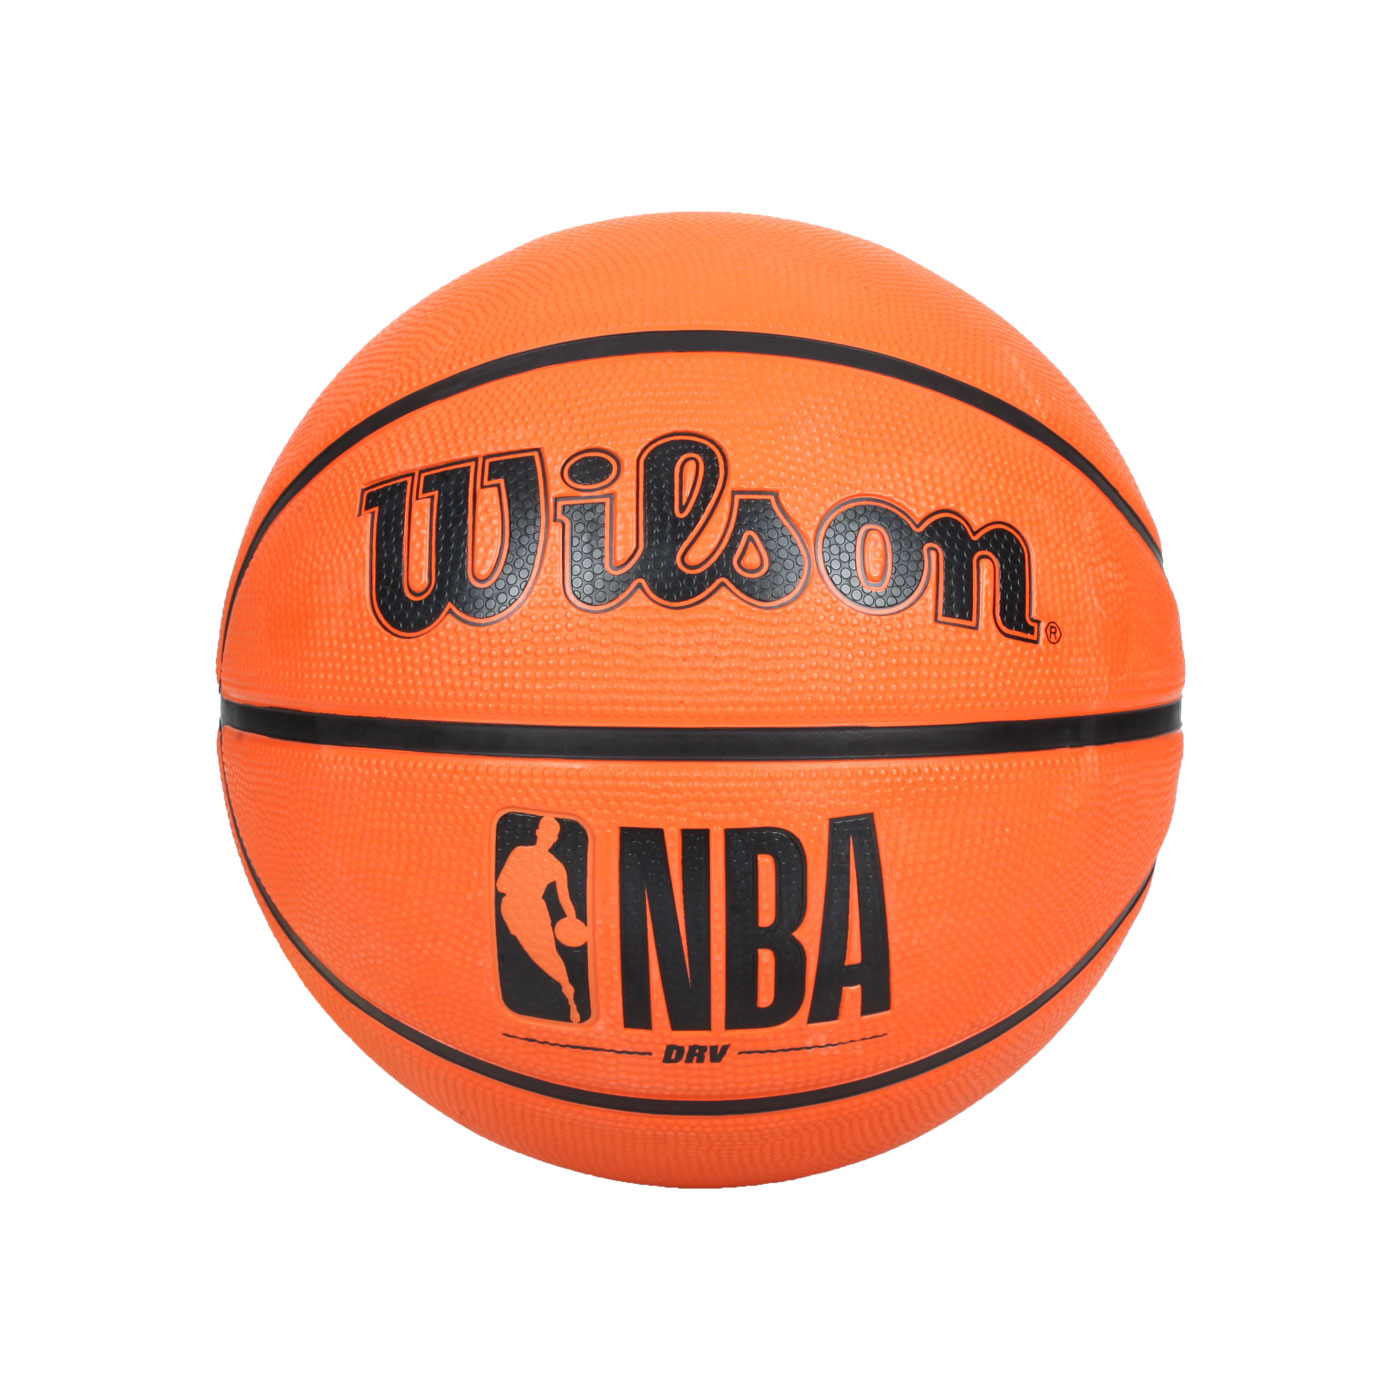 WILSON NBA DRV系列 橡膠籃球#5 WTB9300XB05 - 橘黑